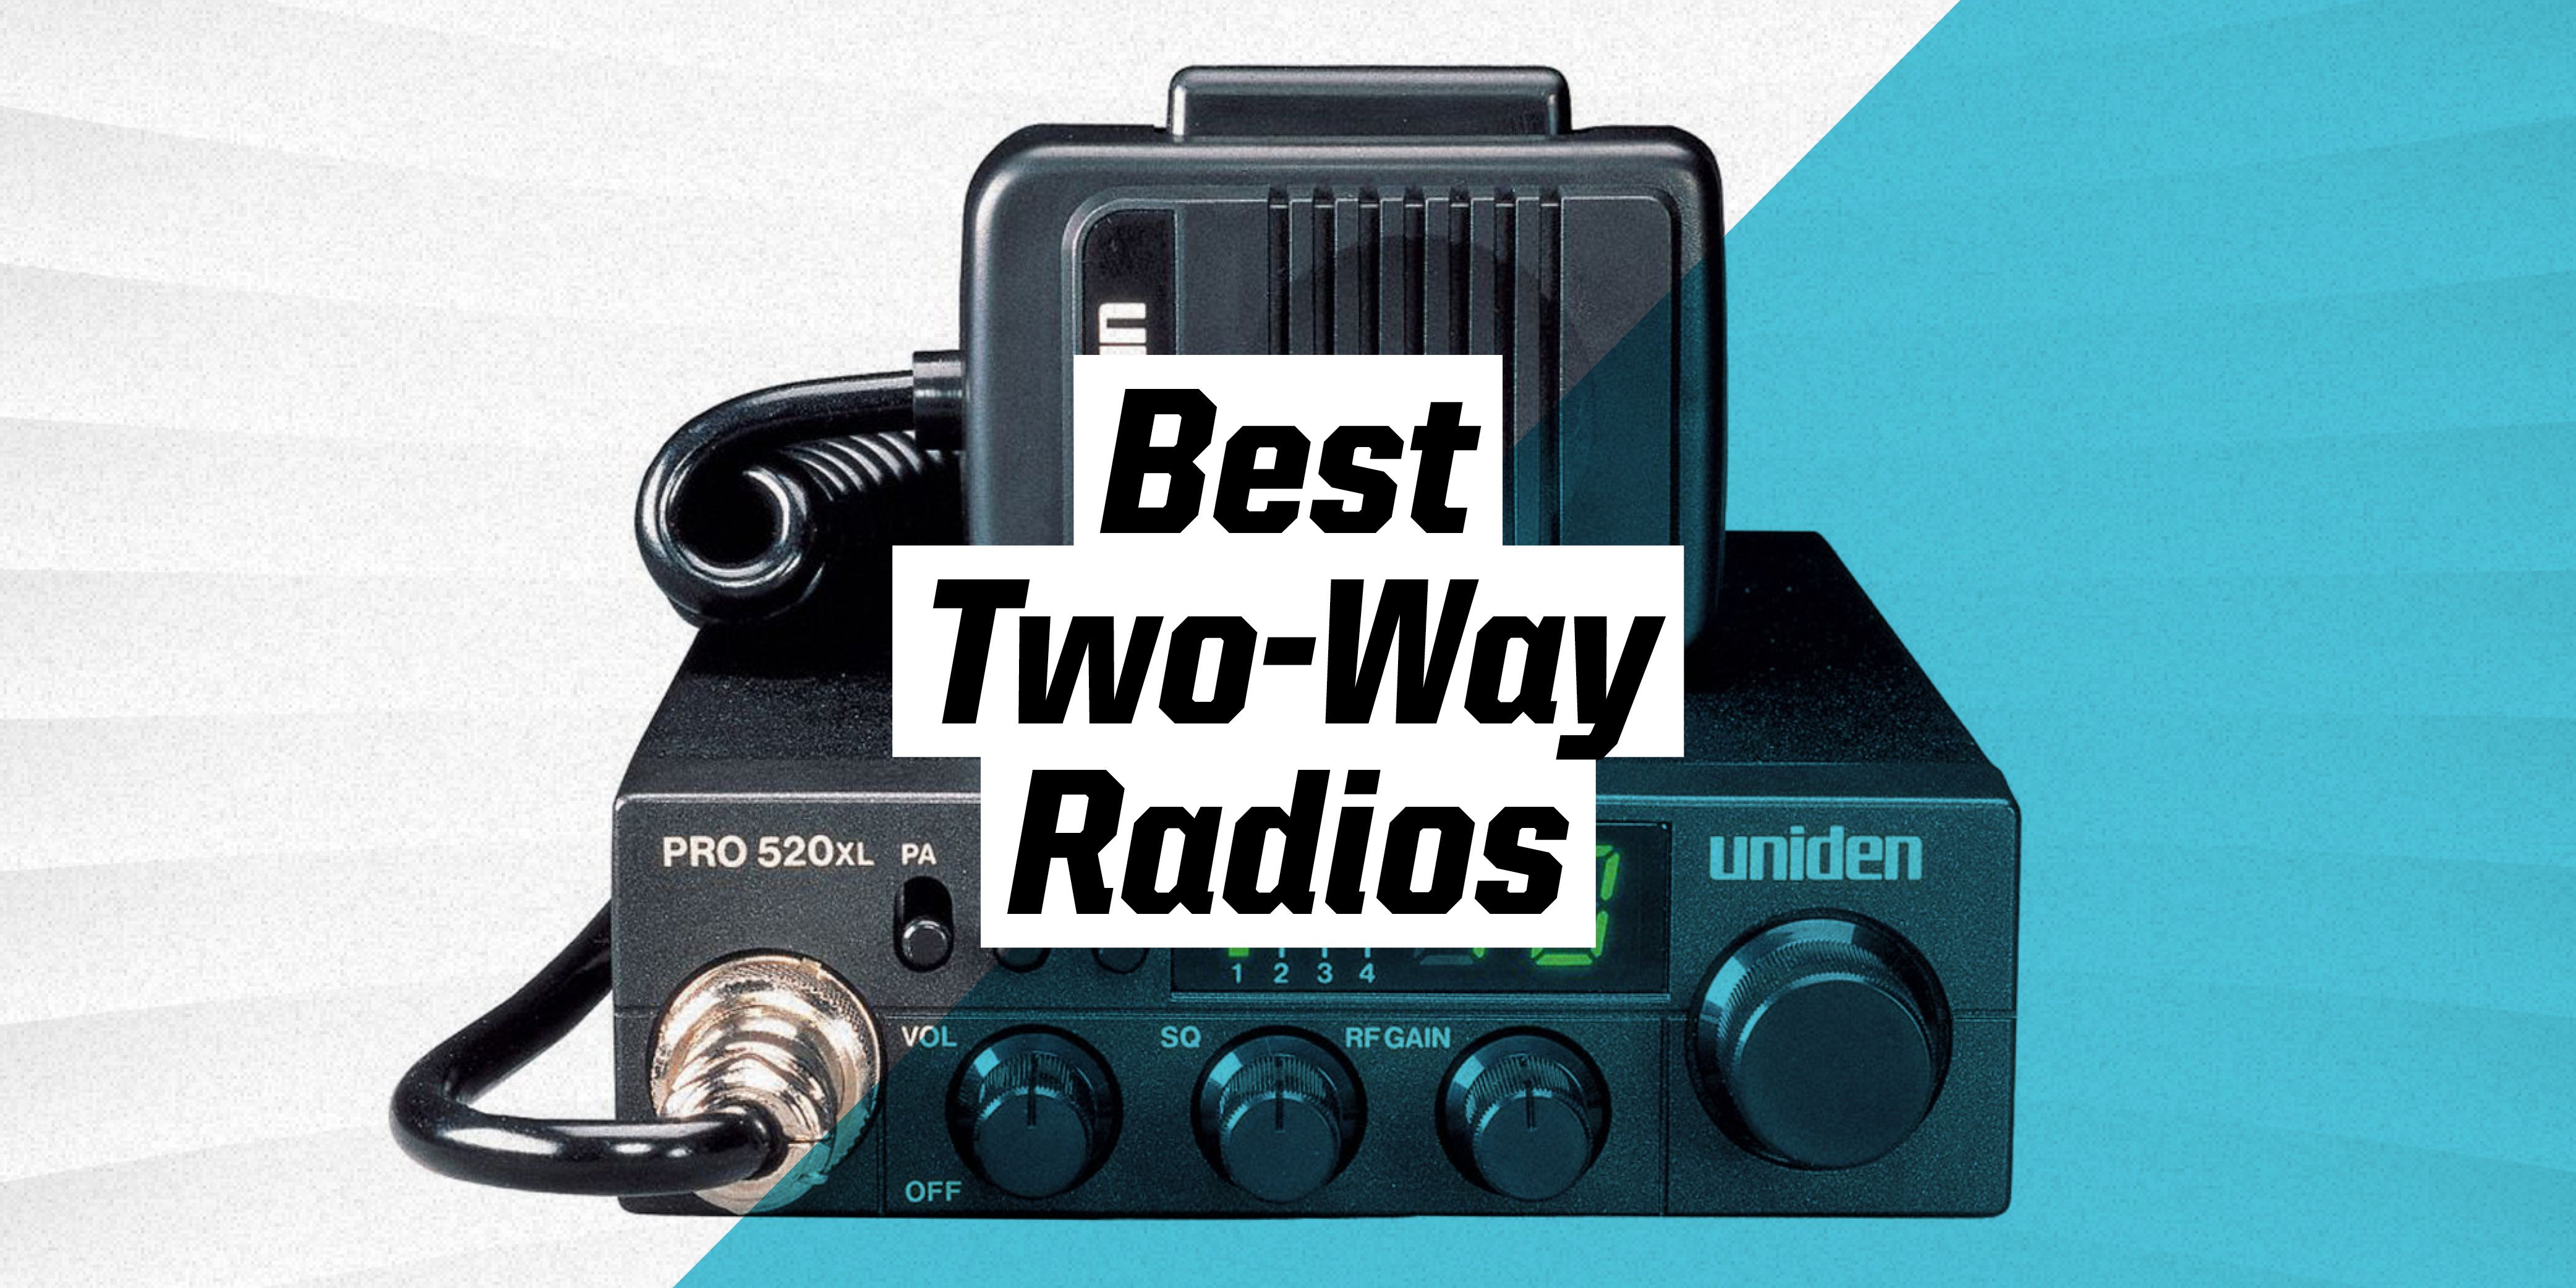 Best Two-Way Radios 2021 Ham and CB Radio Reviews